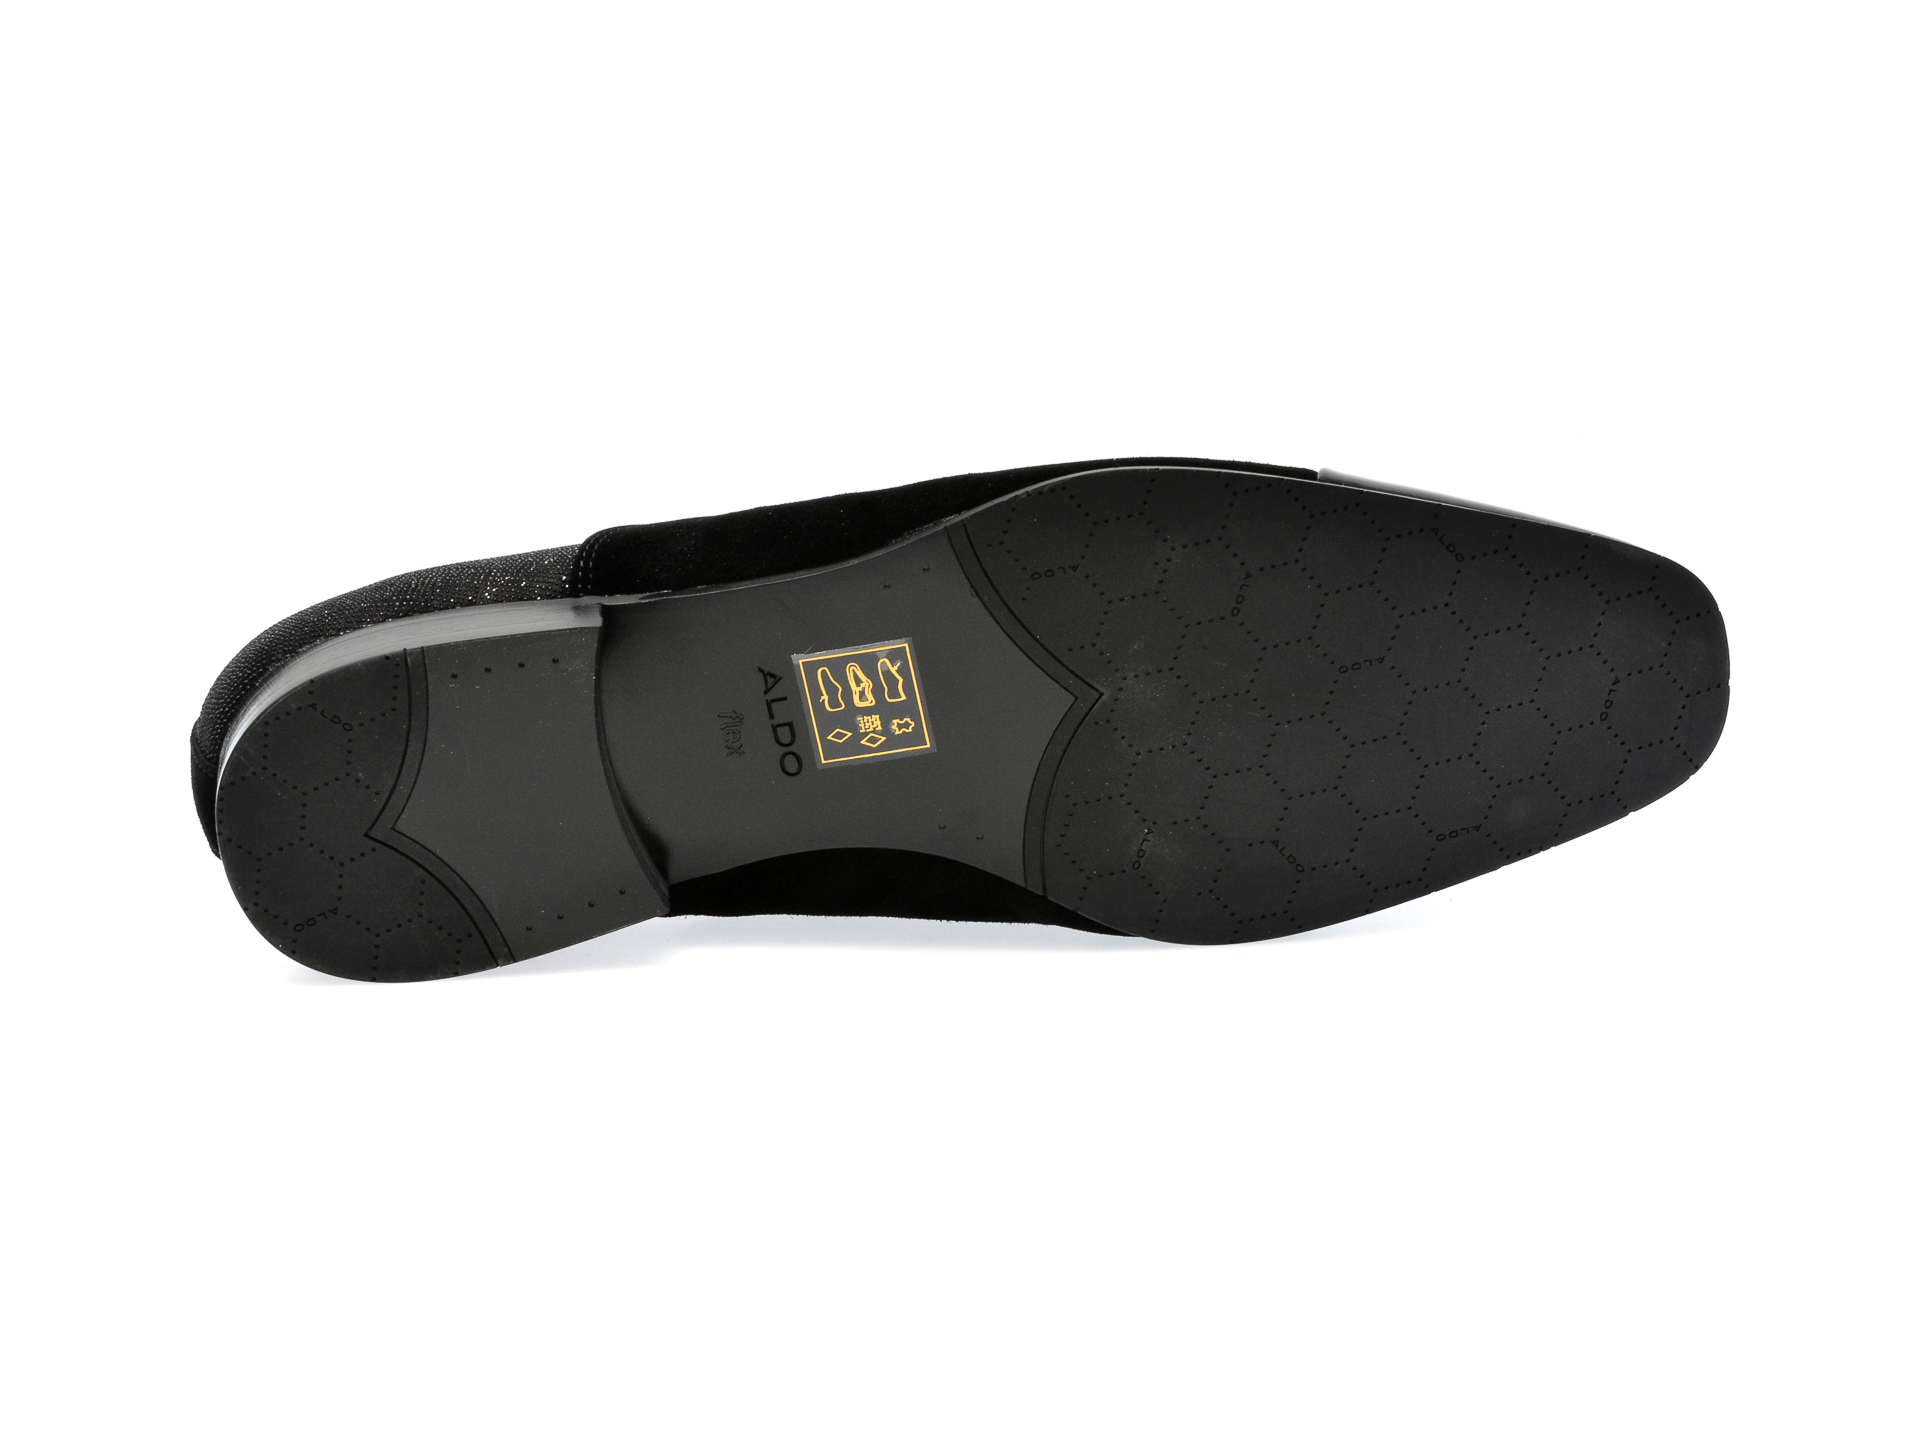 Pantofi ALDO negri, VALENTI001, din piele naturala